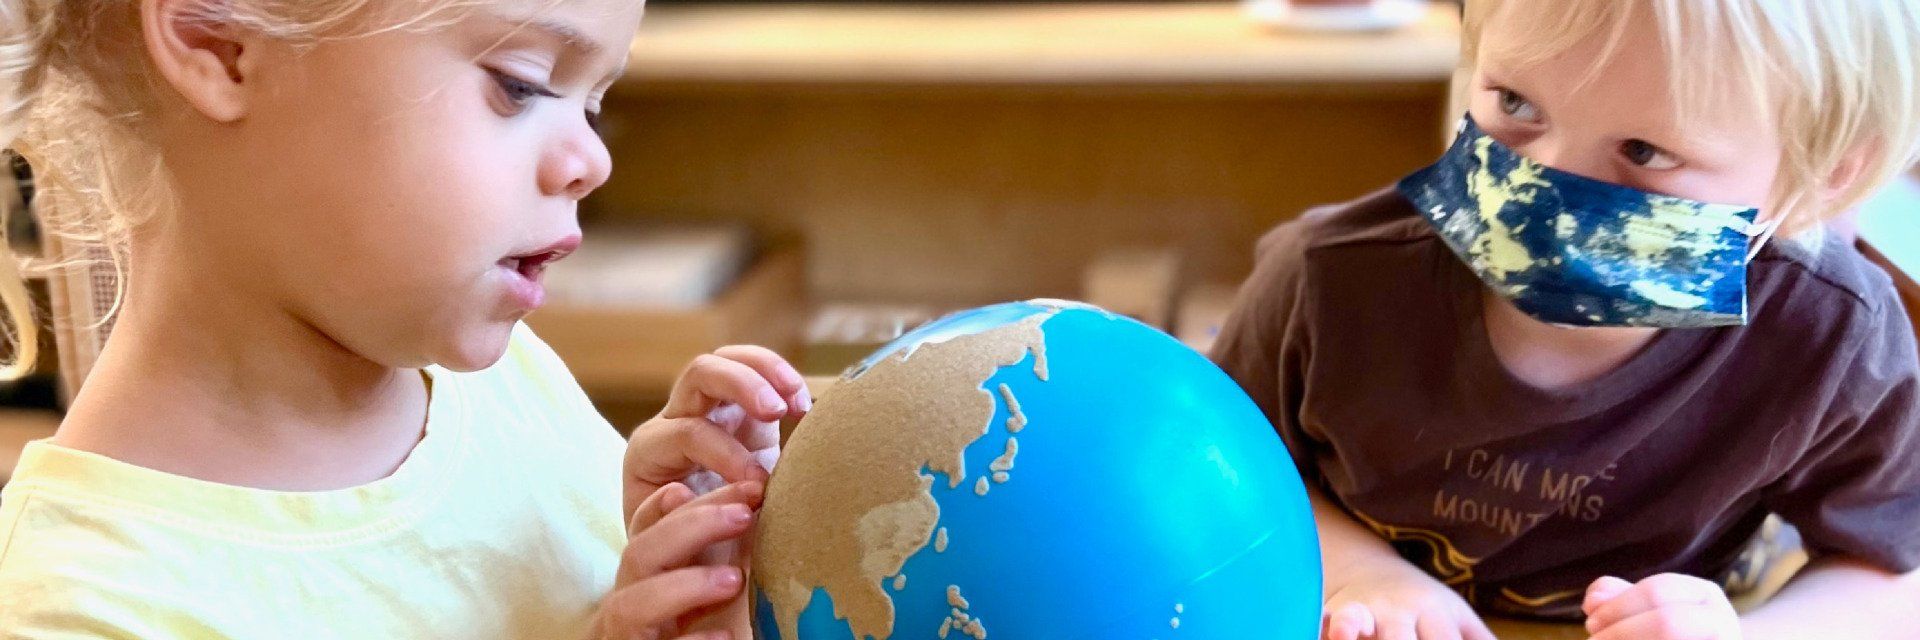 two pre-school aged children with a sandpaper globe